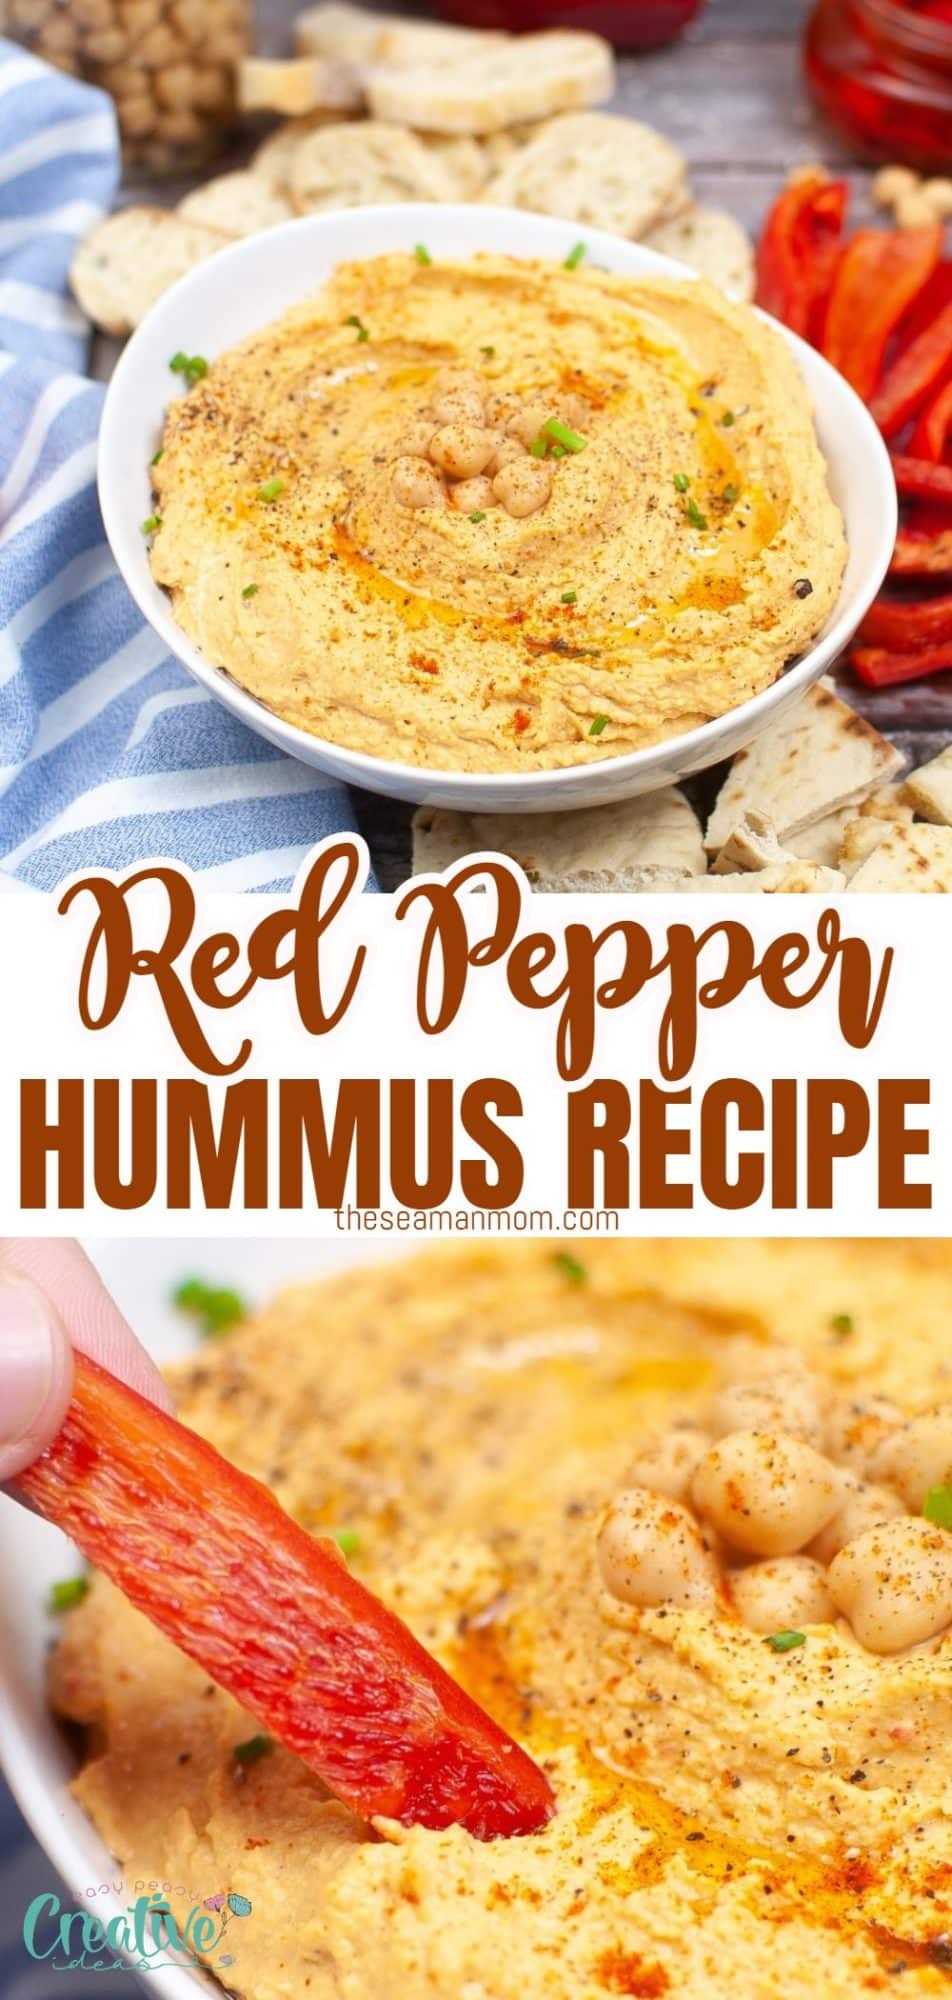 Red pepper hummus